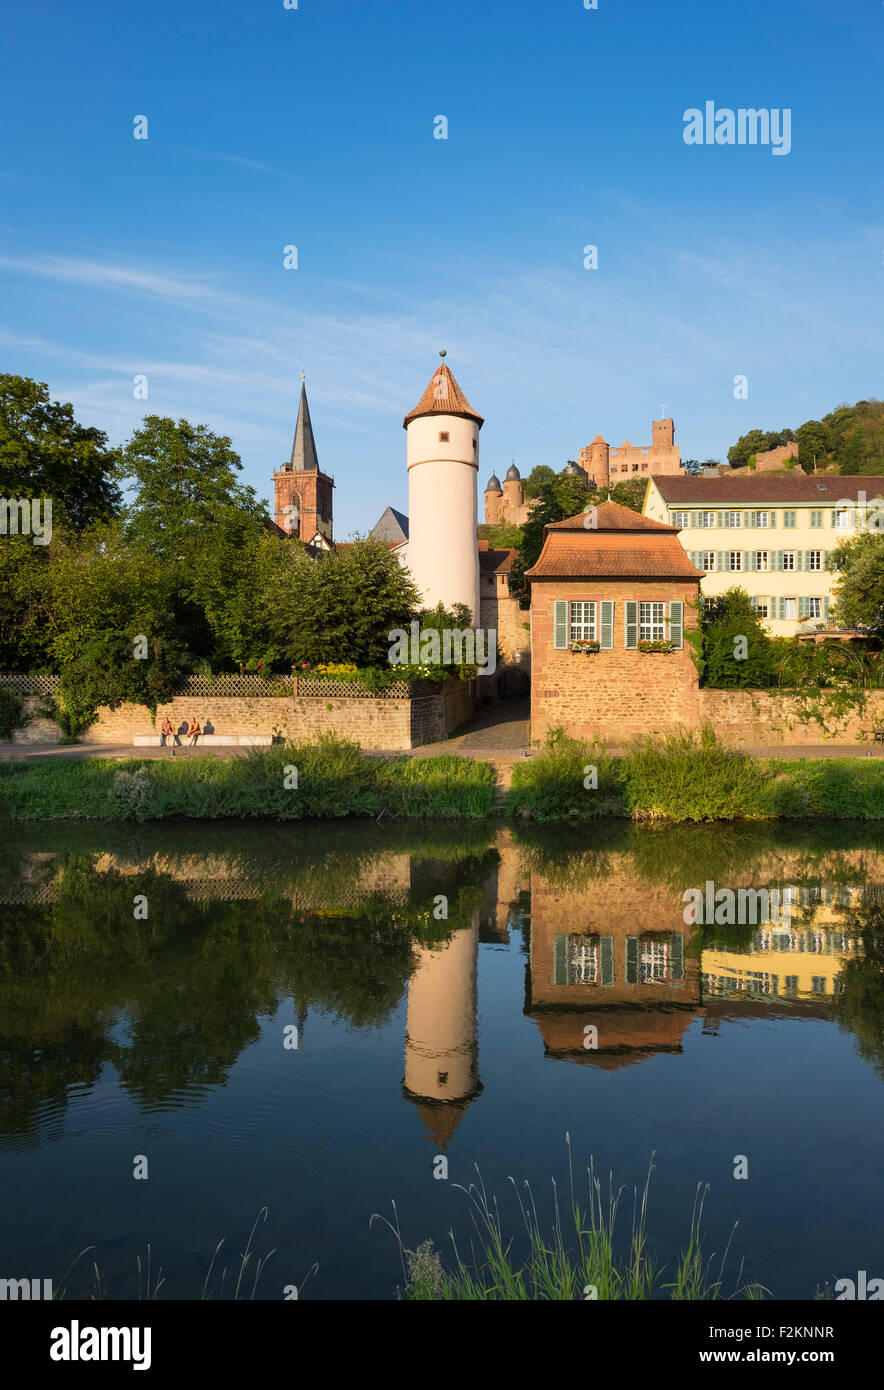 Rivière Tauber, Kittsteintor, tour rouge, église du village et ruines, Wertheim, Bade-Wurtemberg, Allemagne Banque D'Images